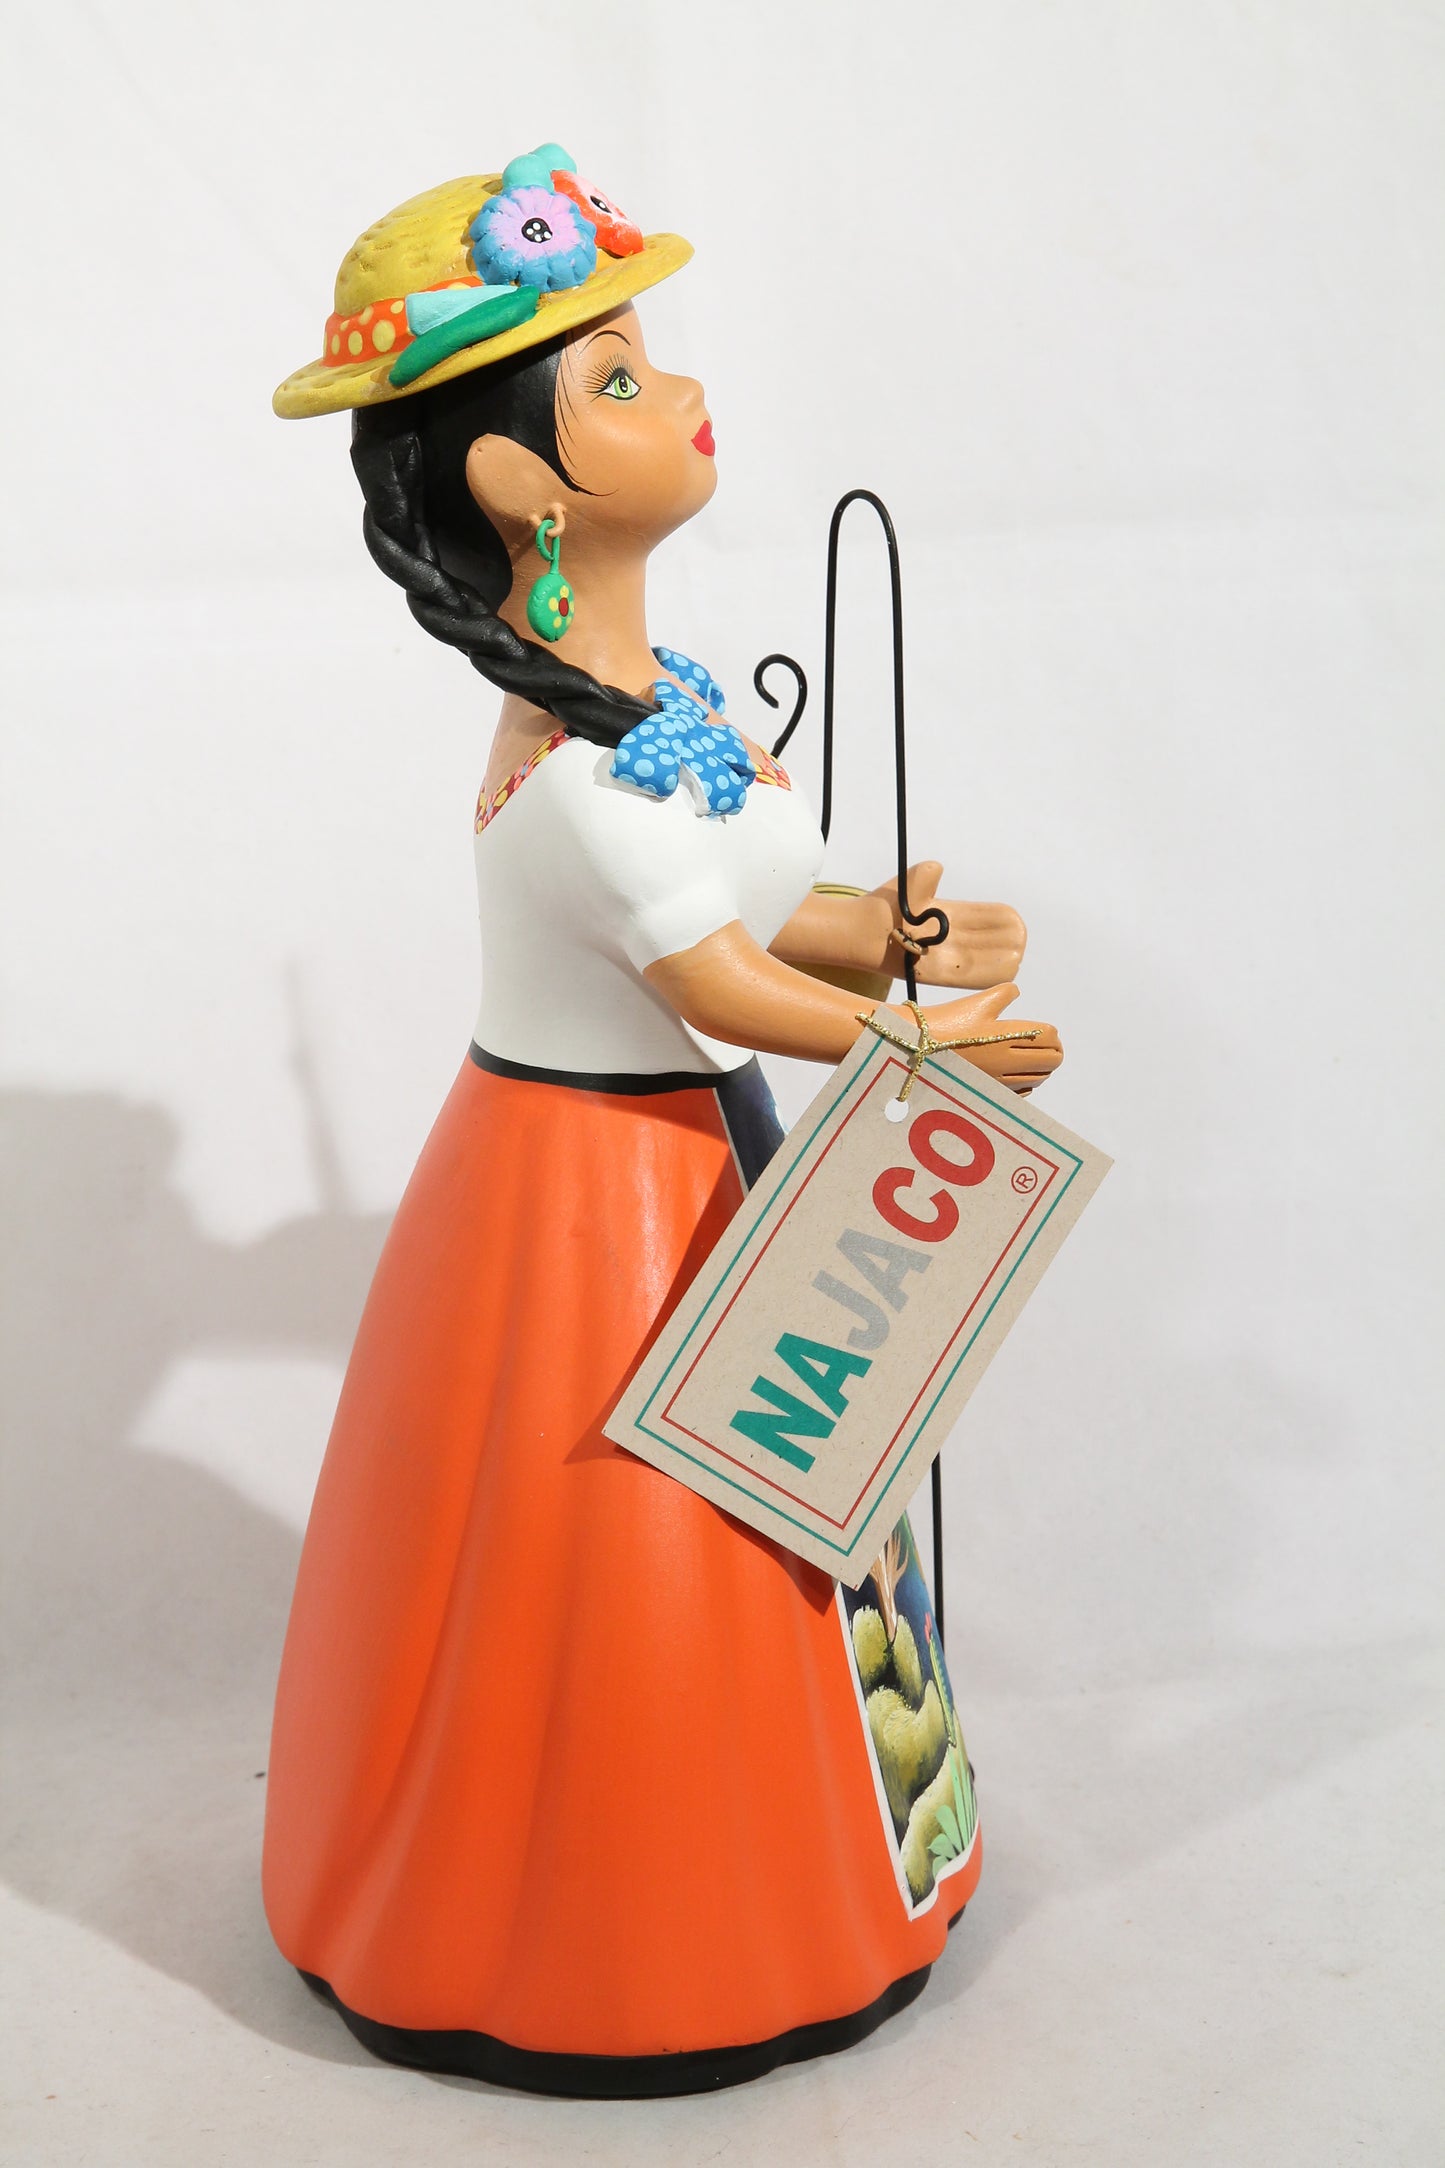 Lupita Najaco Ceramic Doll/Figurine Shepherdess Mexican Folk Art Clay Hat Orange